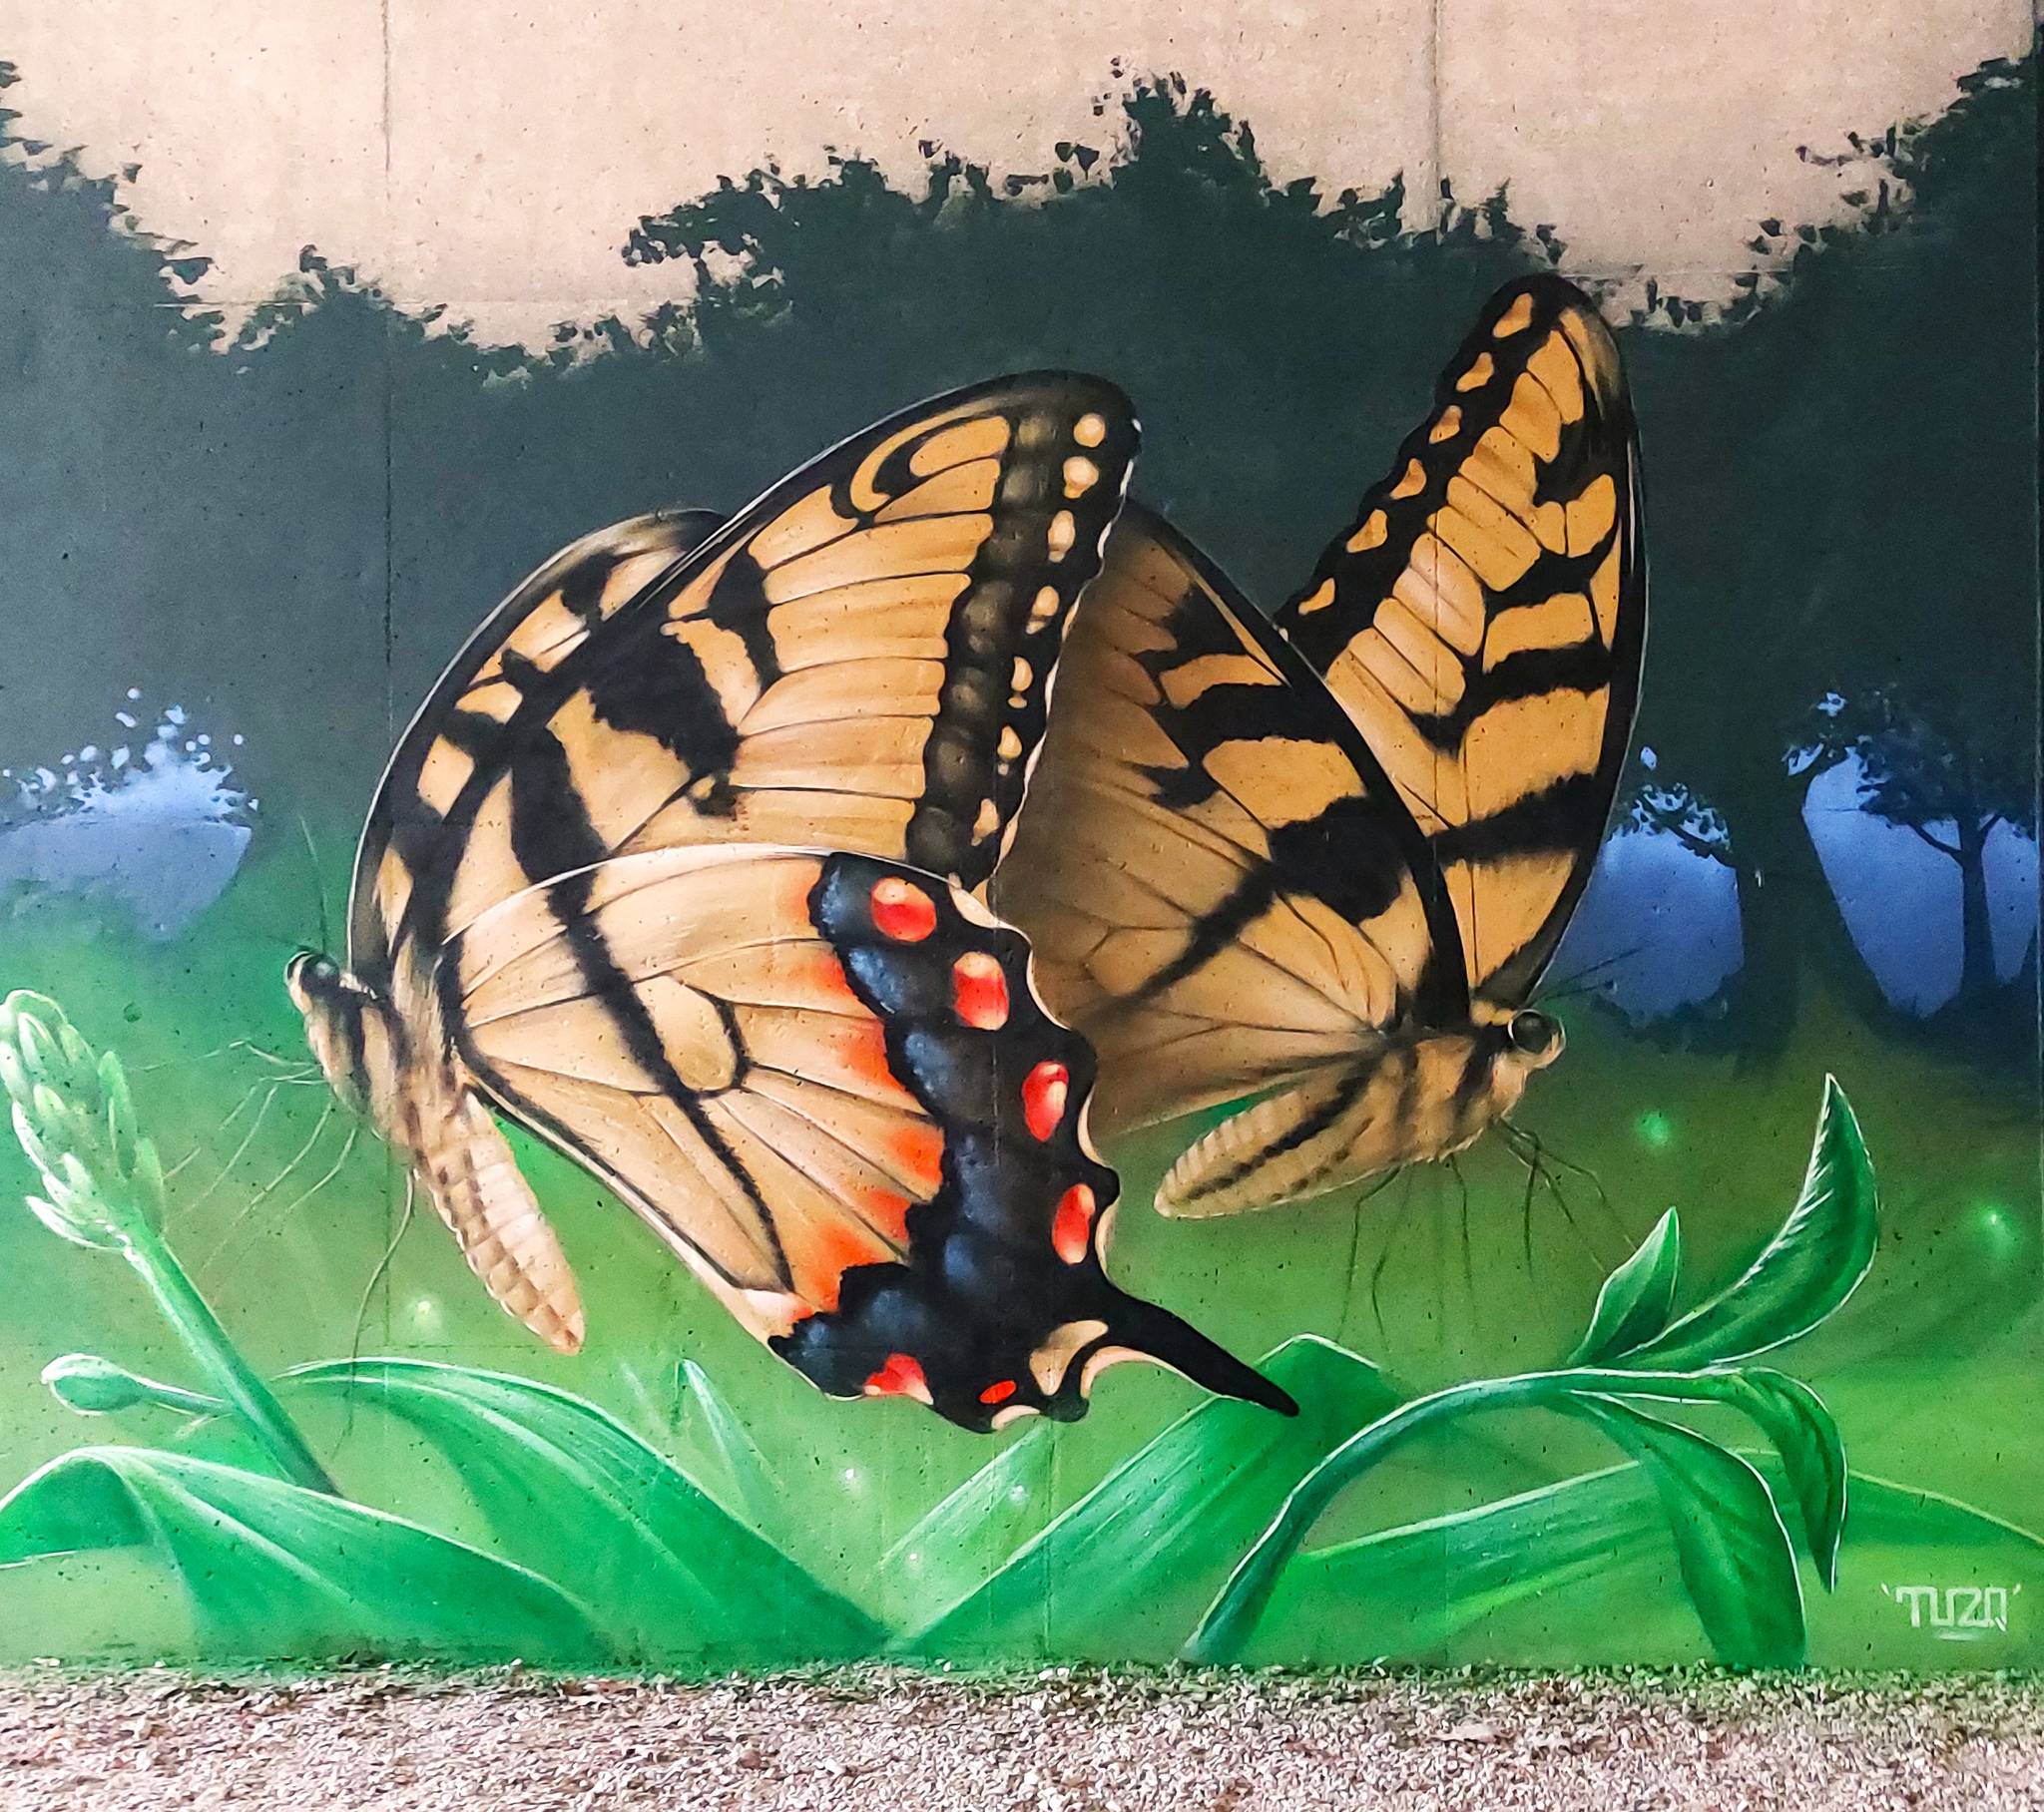 TUZQ&mdash;Swallowtail butterfly